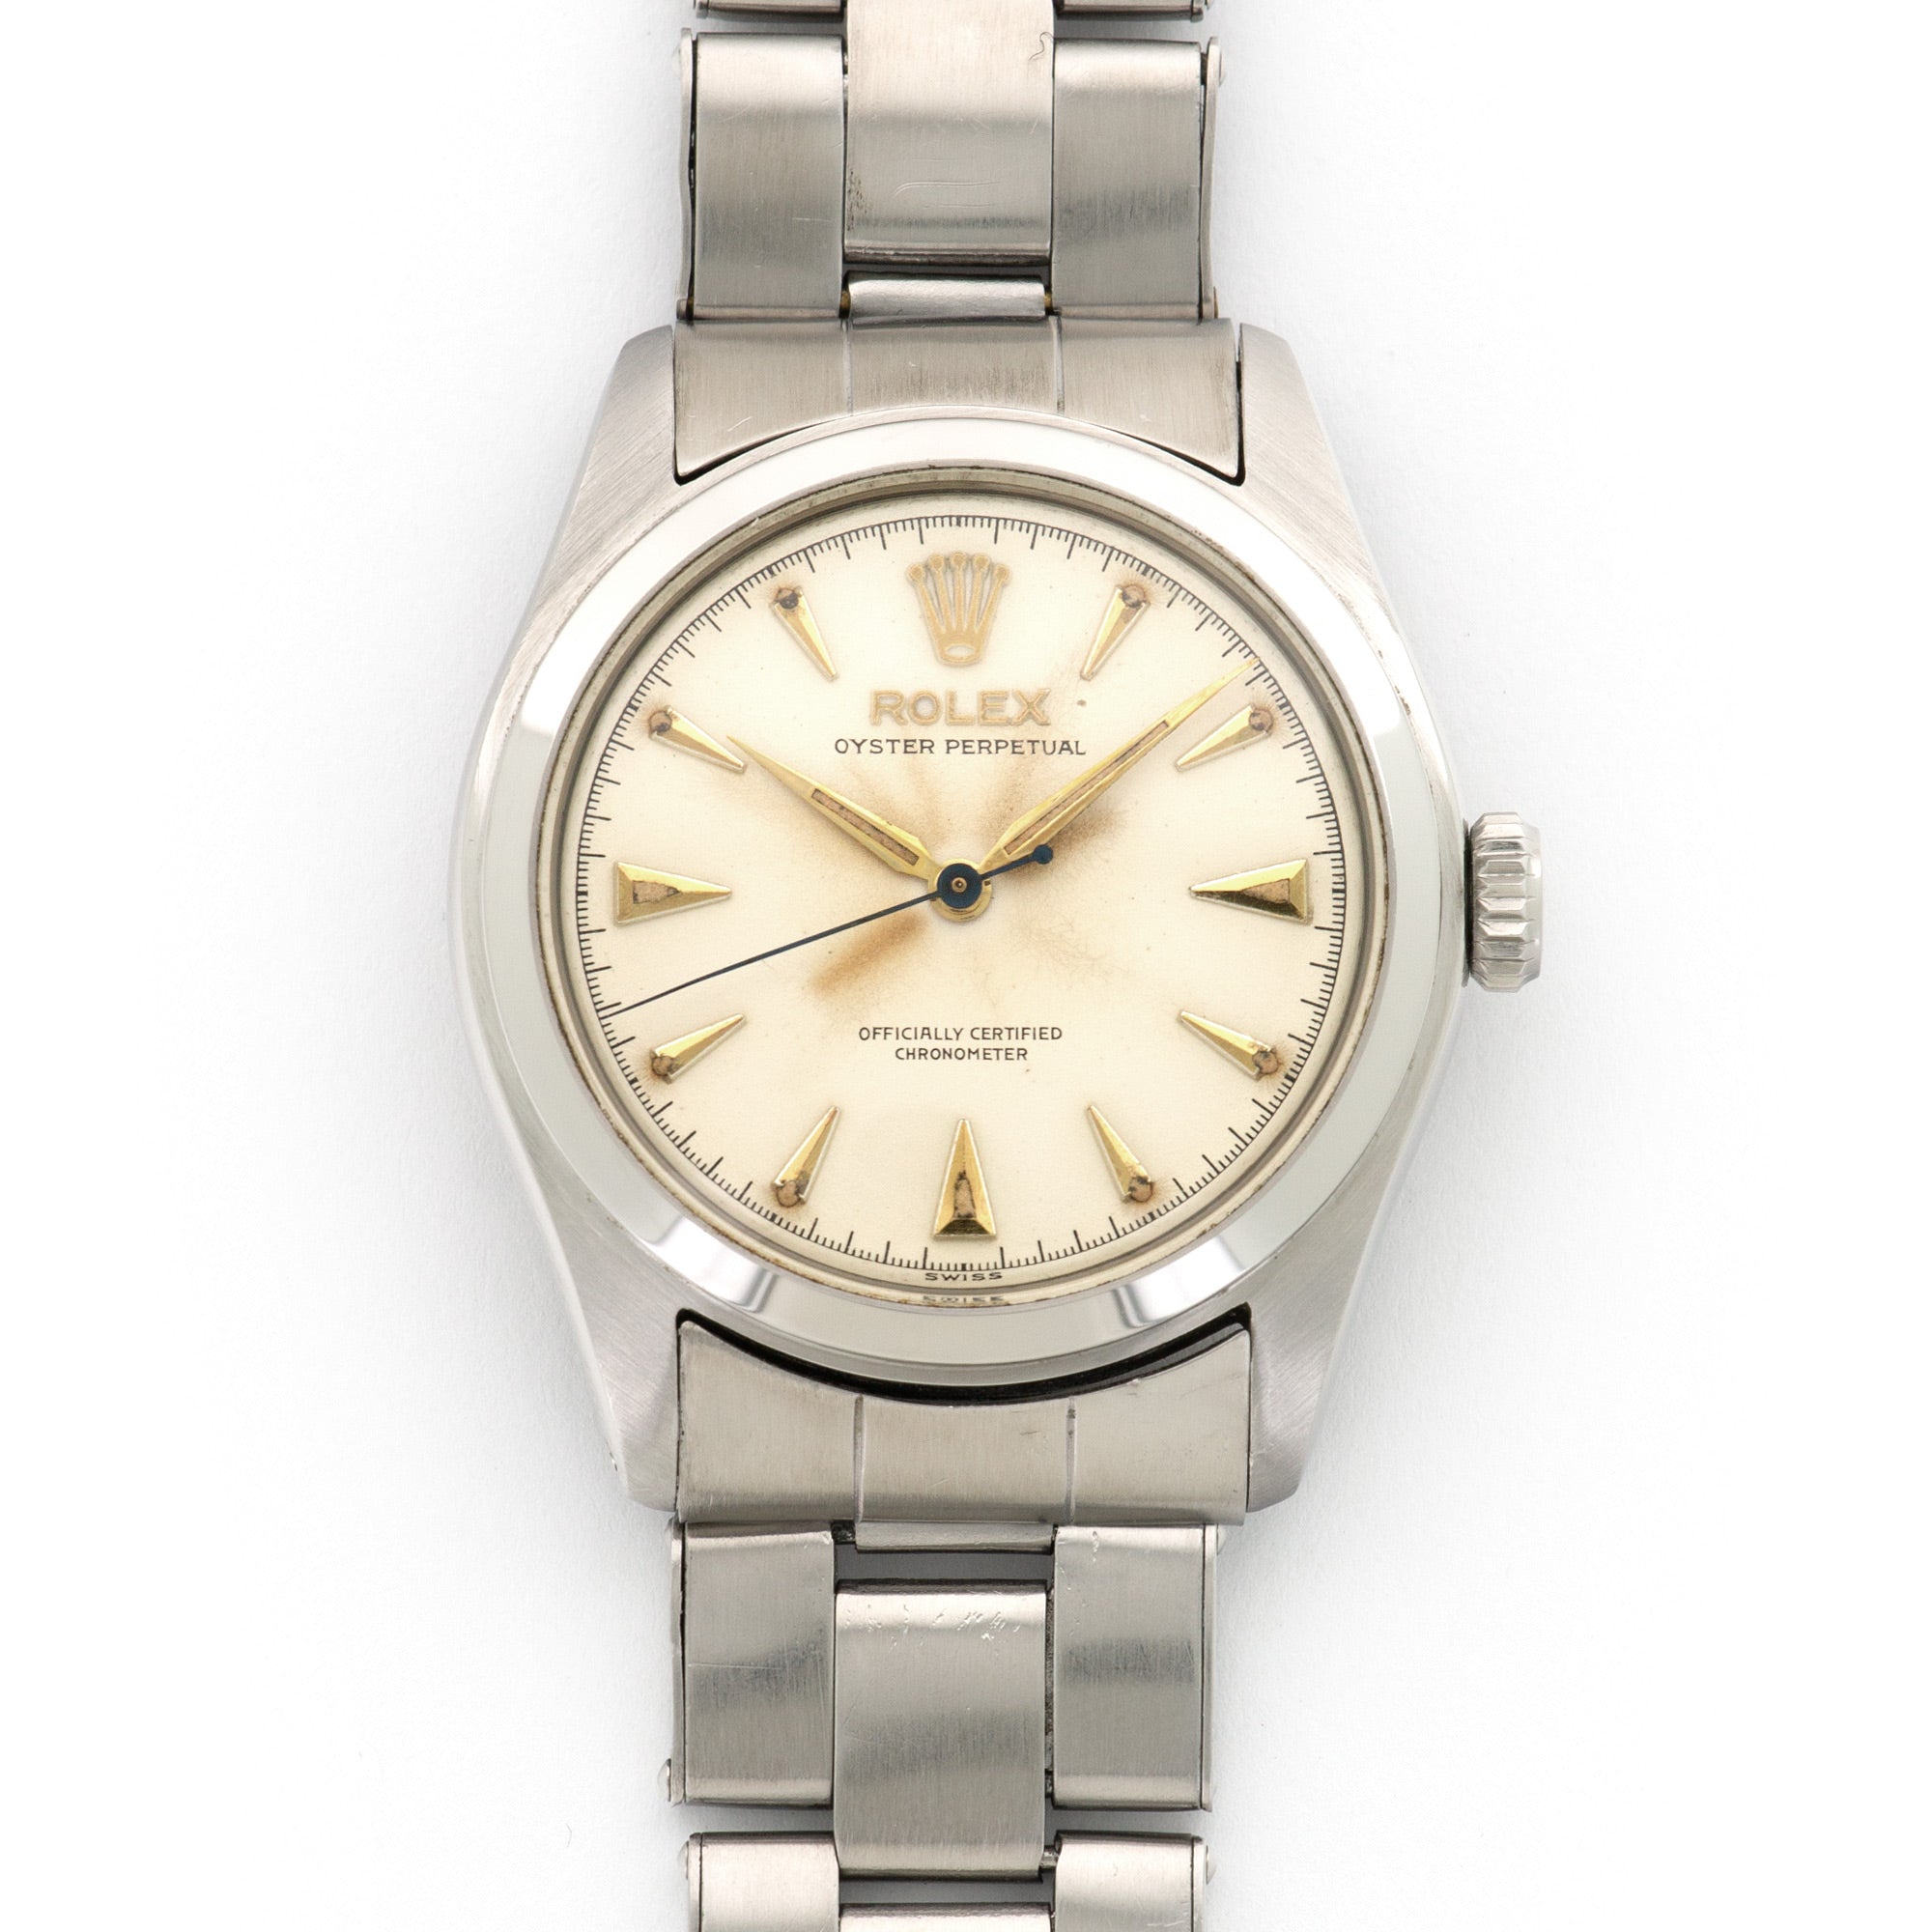 Rolex - Rolex Oyster Perpetual Watch Ref. 6106, Circa 1958 - The Keystone Watches